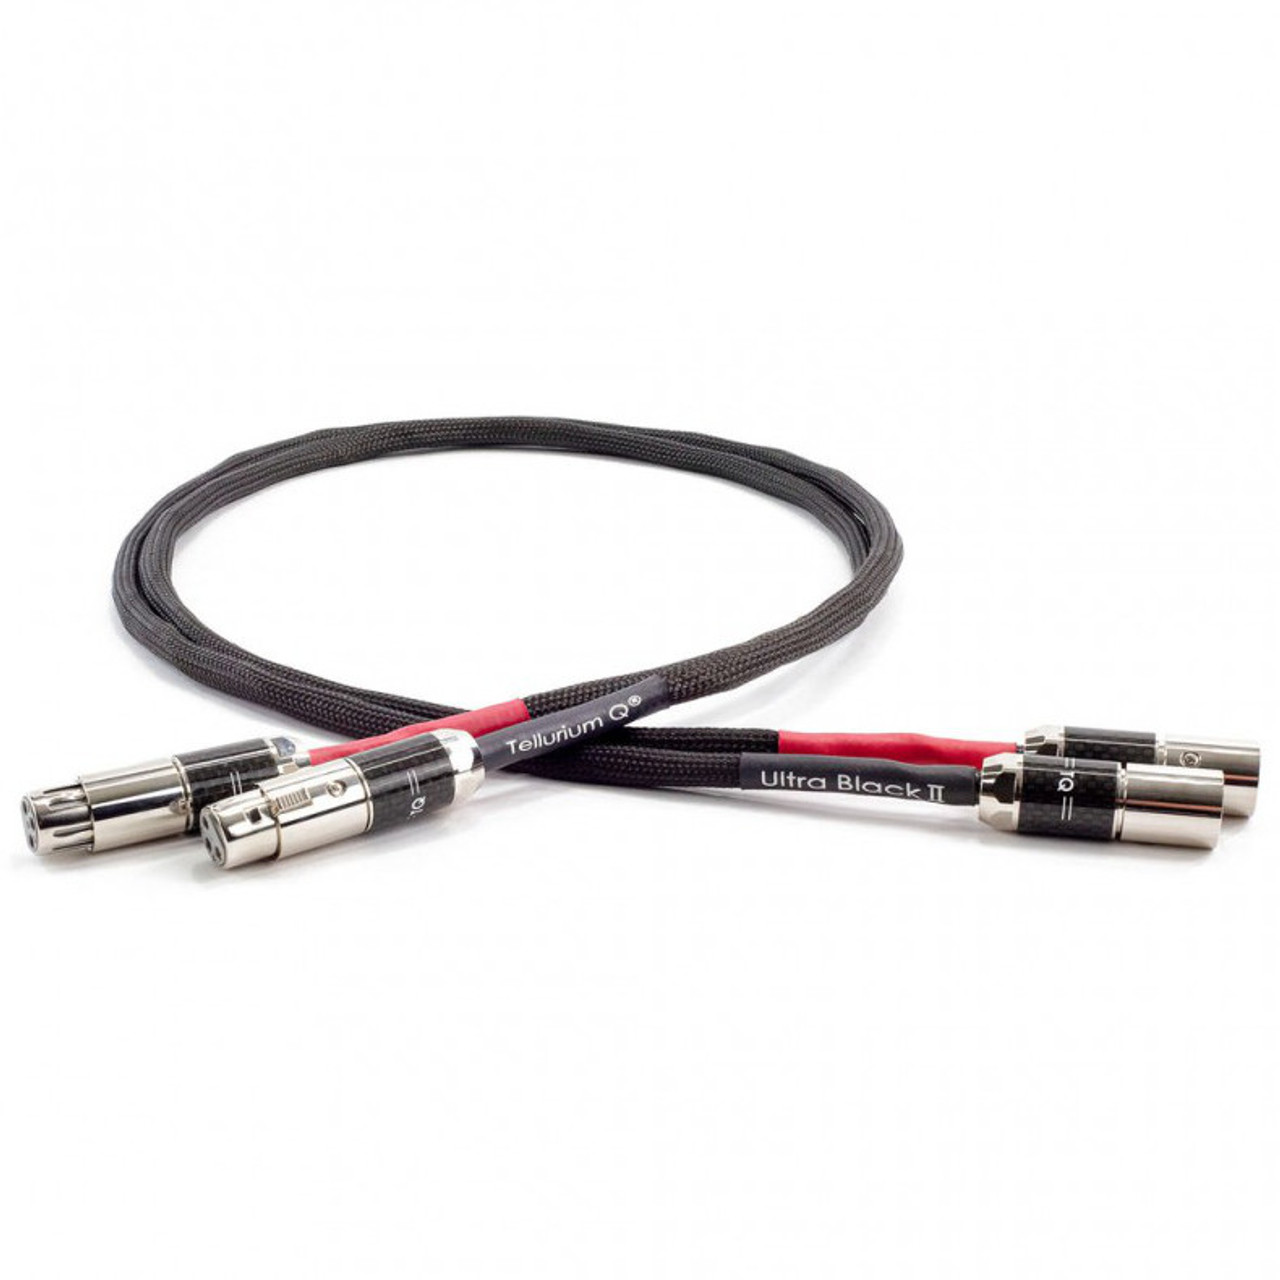 Tellurium Q Ultra Black II XLR cables